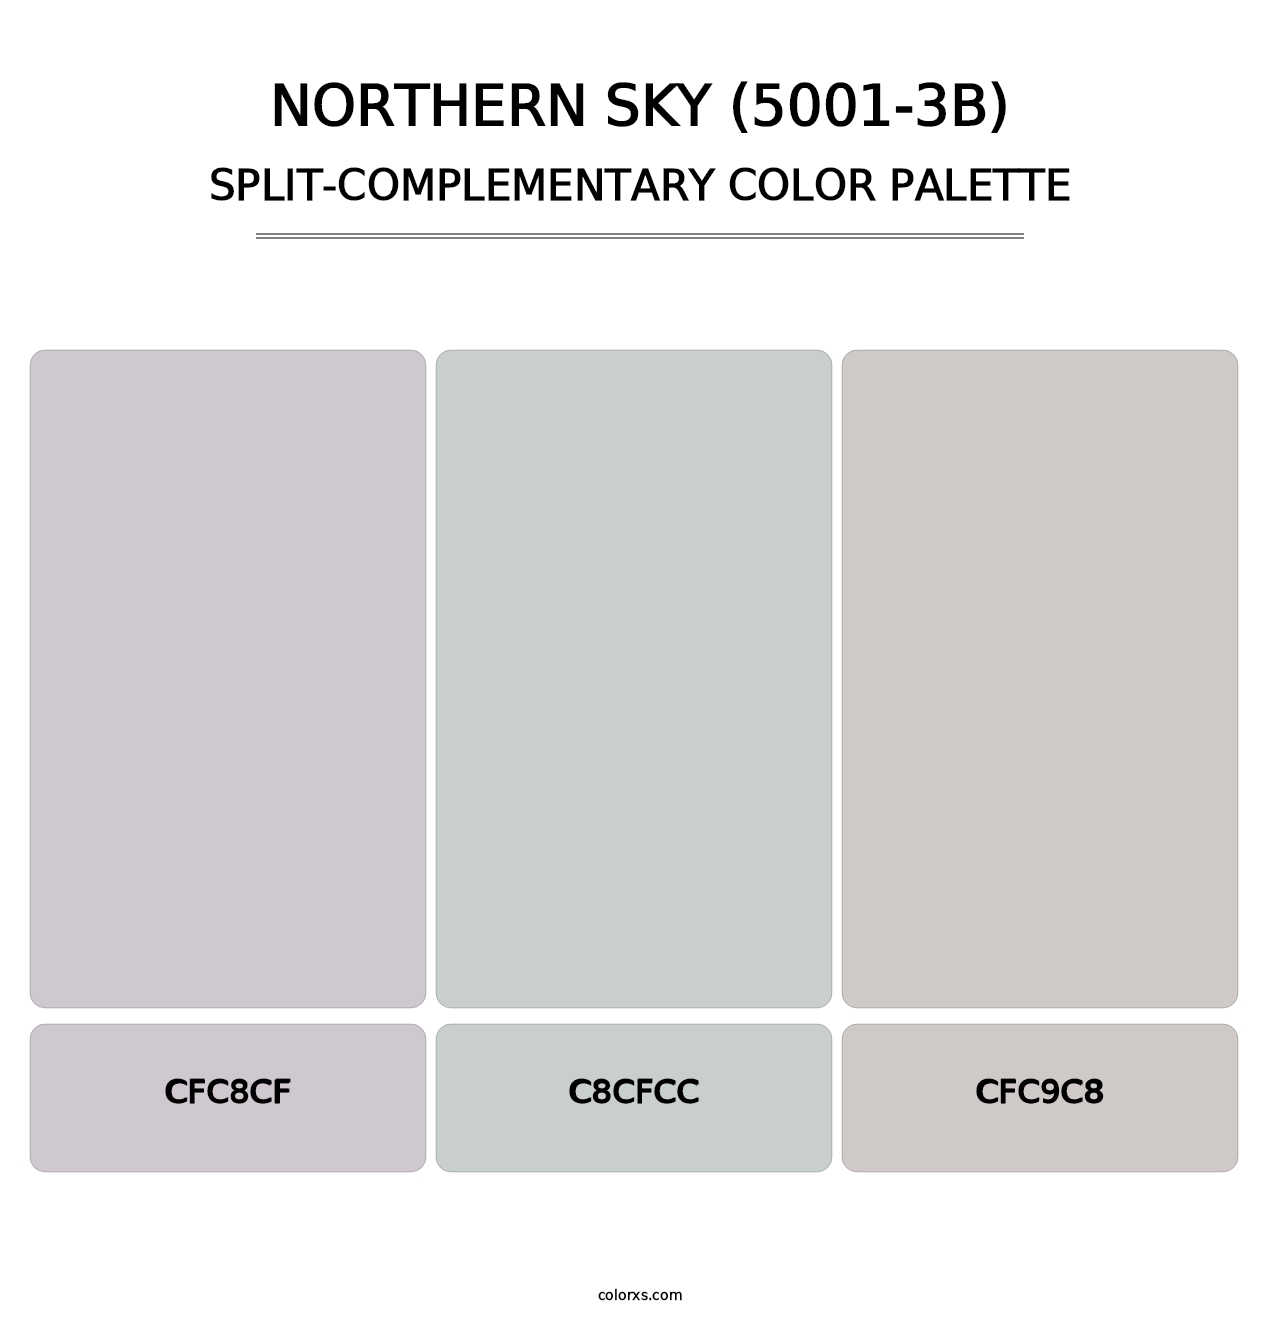 Northern Sky (5001-3B) - Split-Complementary Color Palette